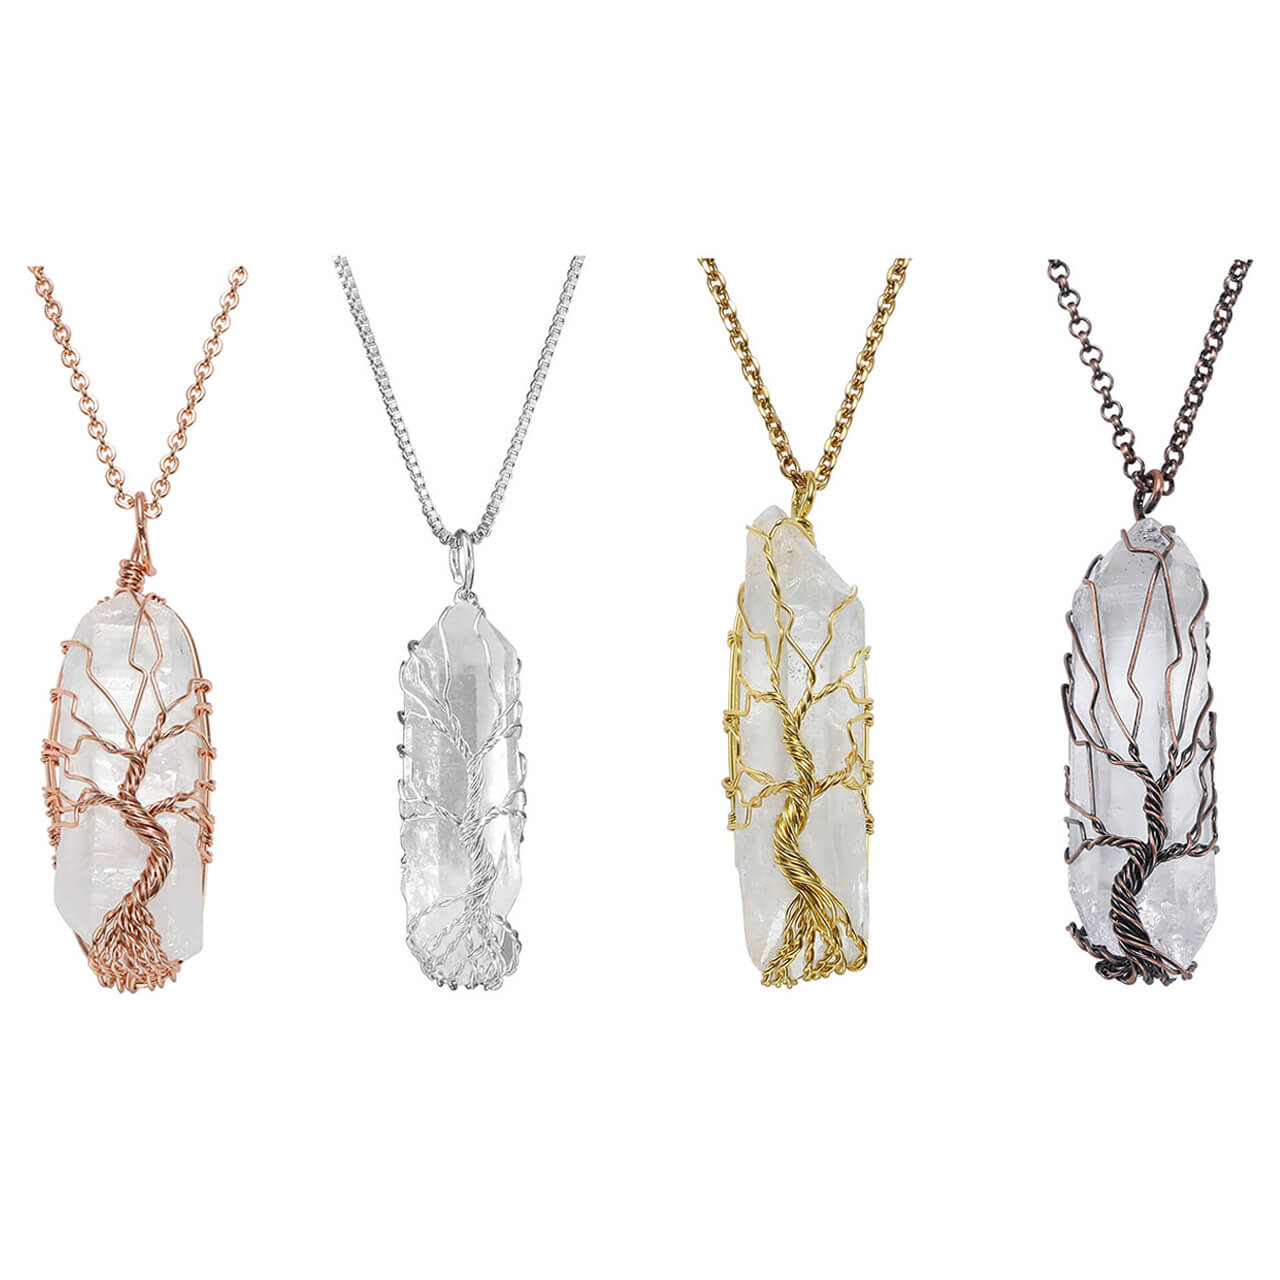 jovivi chakras gemstones tree of life healing crystal jewelry for women